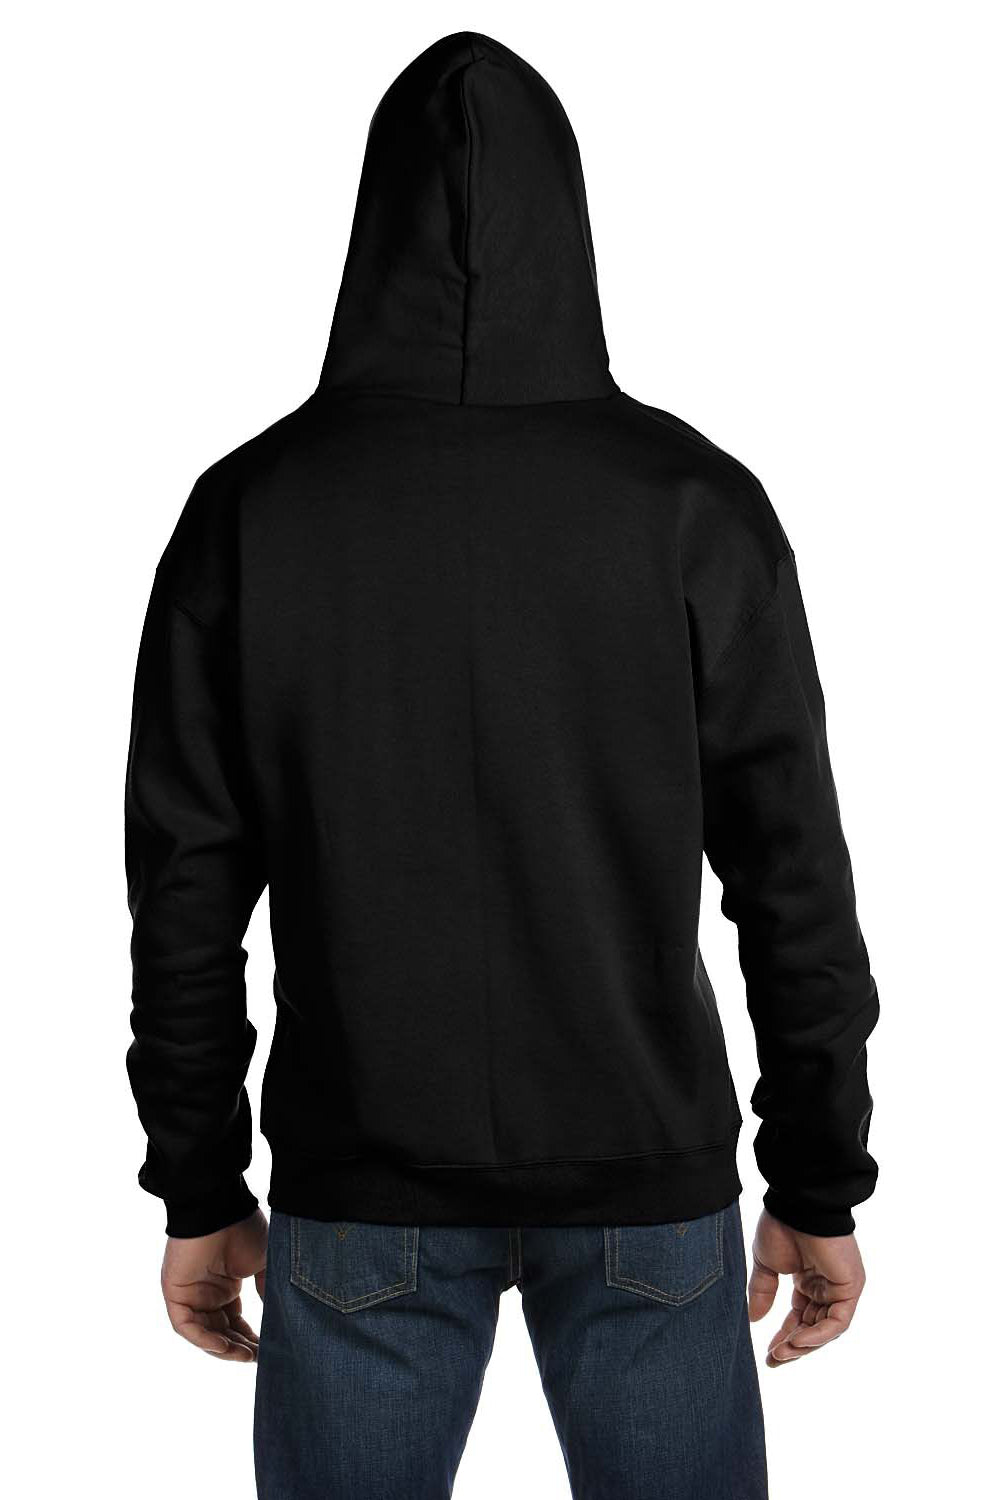 Champion S800 Mens Double Dry Eco Moisture Wicking Fleece Full Zip Hooded Sweatshirt Hoodie Black Back